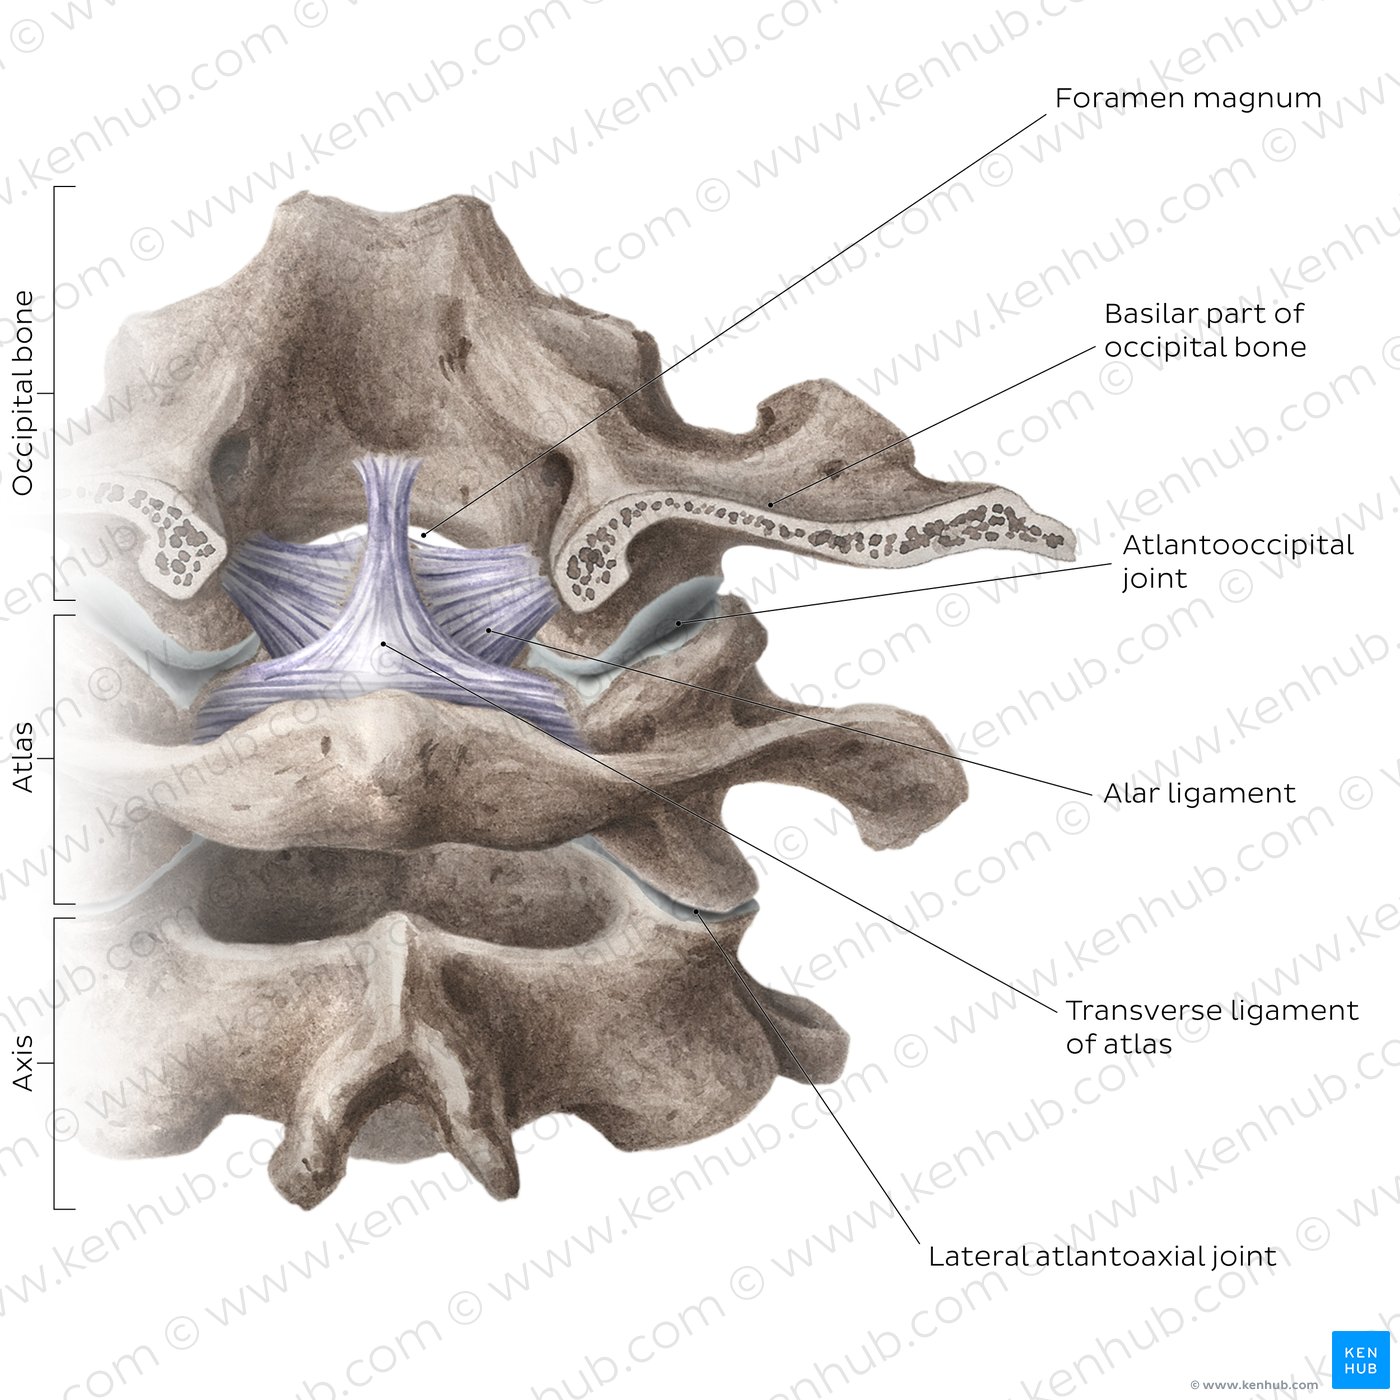 Atlantooccipital and atlantoaxial joints